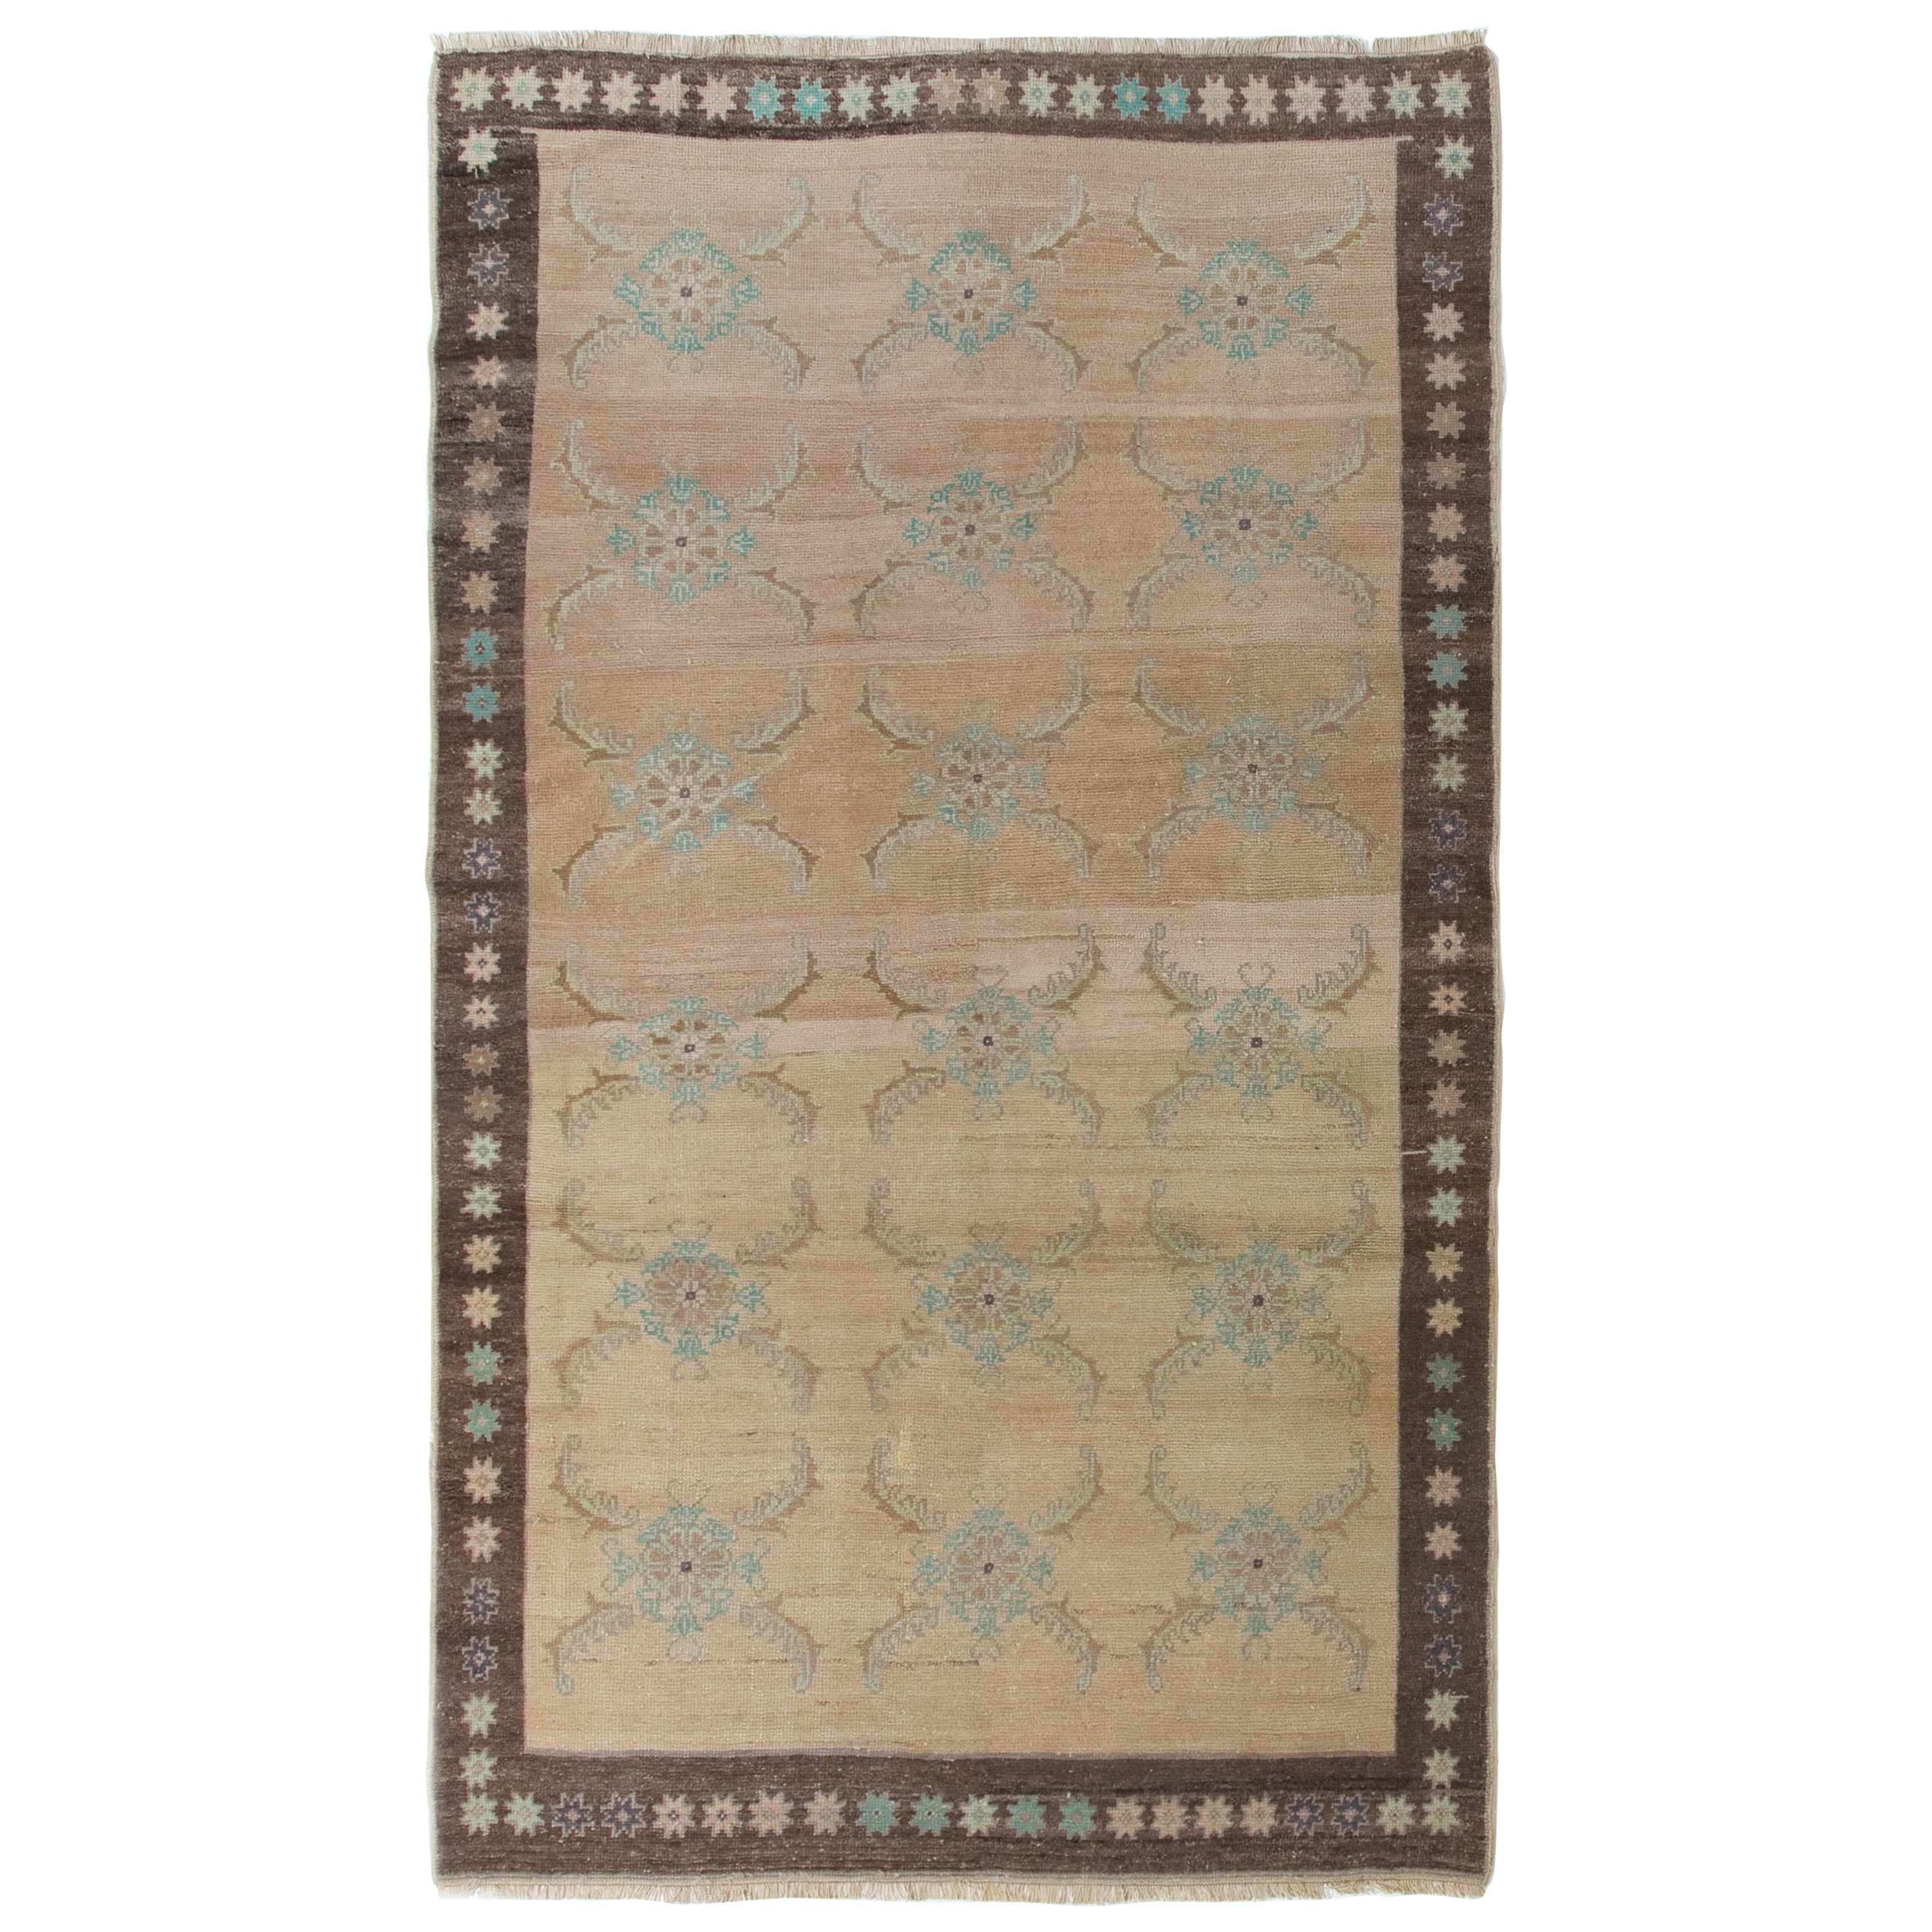 4.4x7.6 Ft Vintage Wool Rug from Karapinar / Turkey, Handmade Floral Carpet For Sale